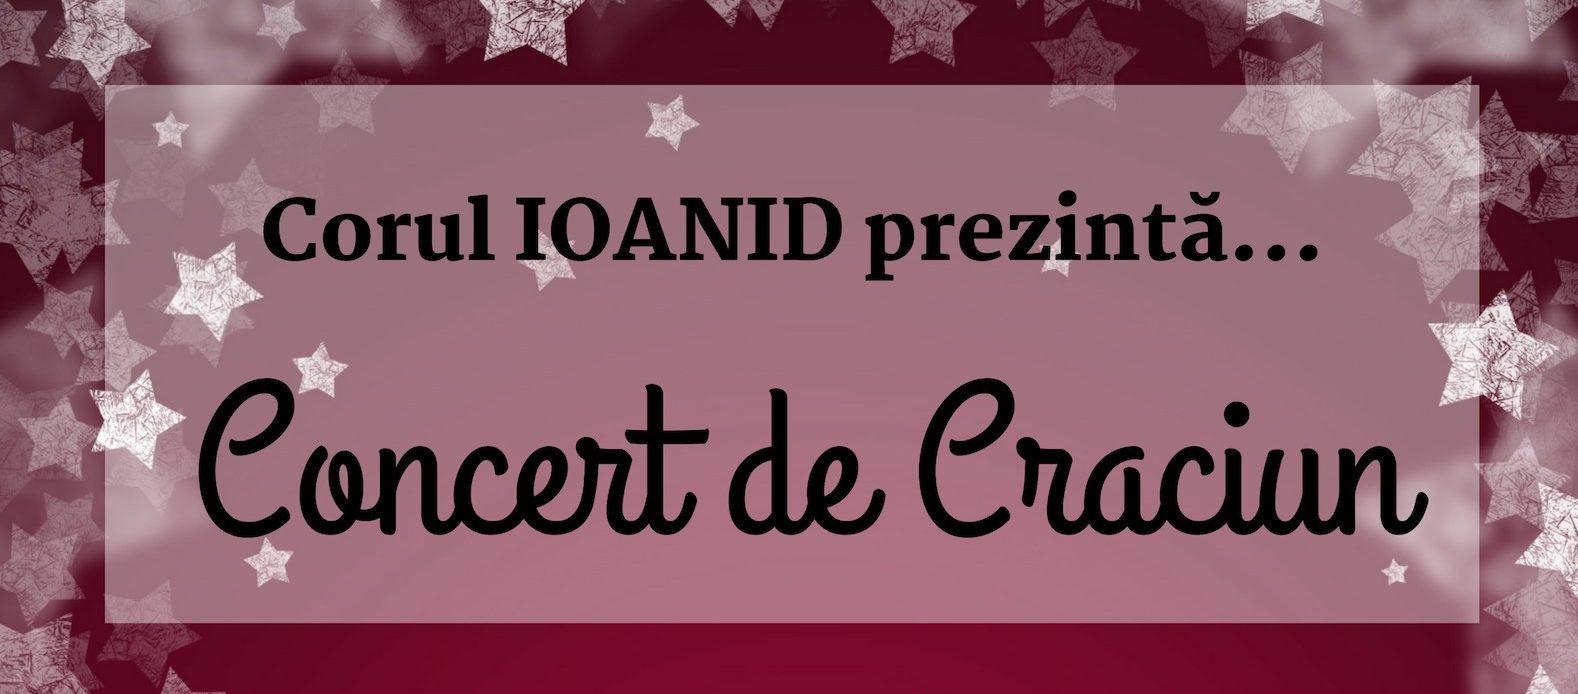 Concert de Craciun – Corul IOANID